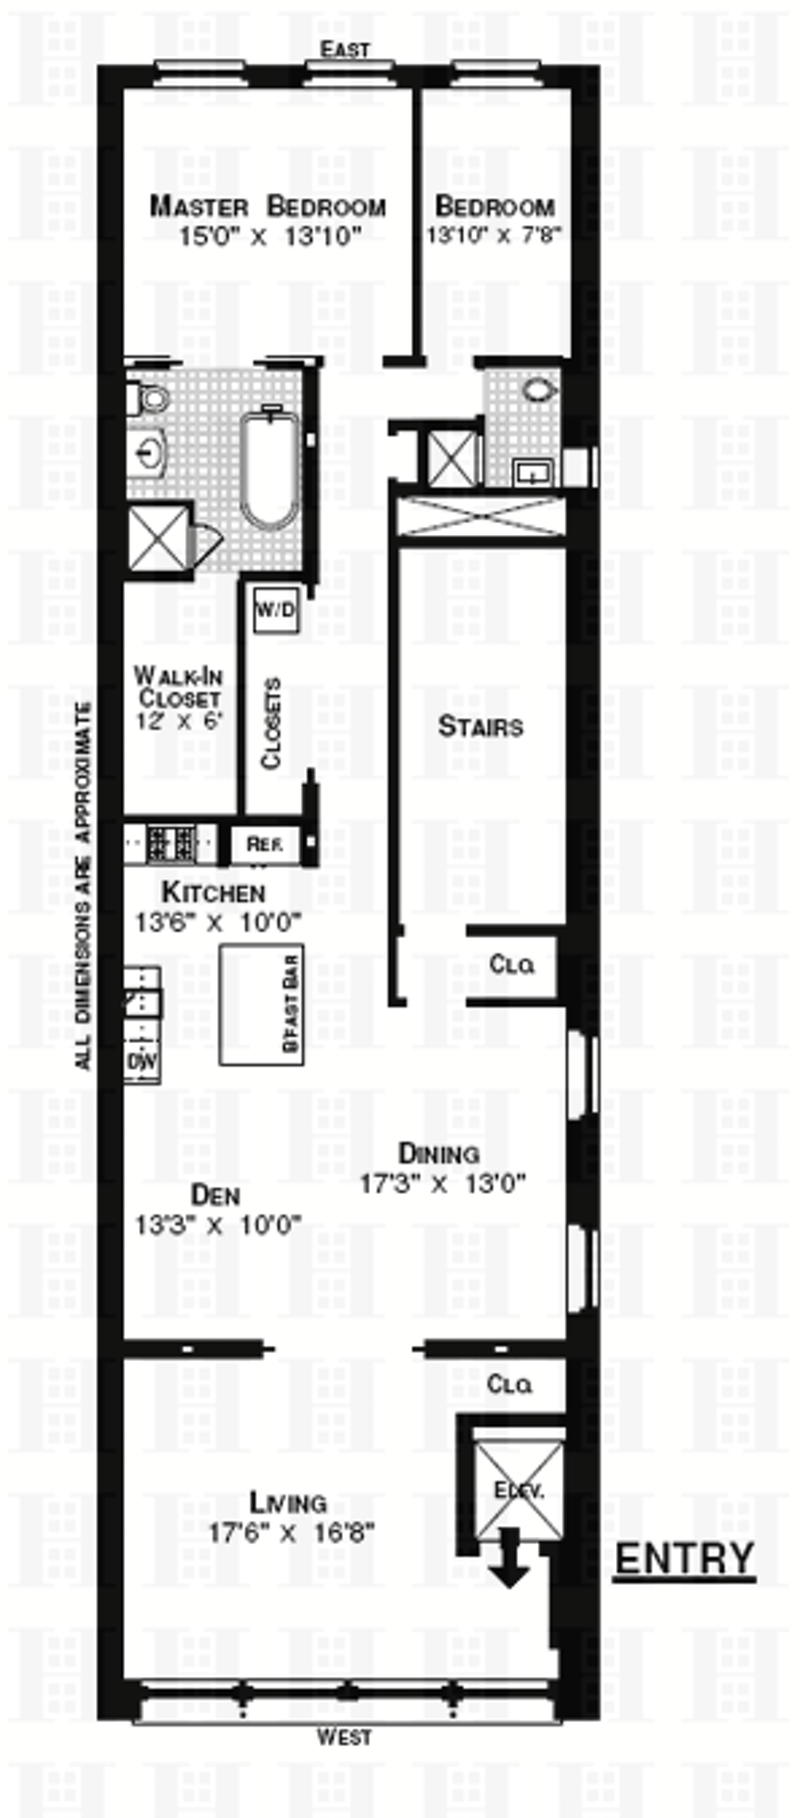 Floorplan for 130 Greene Street